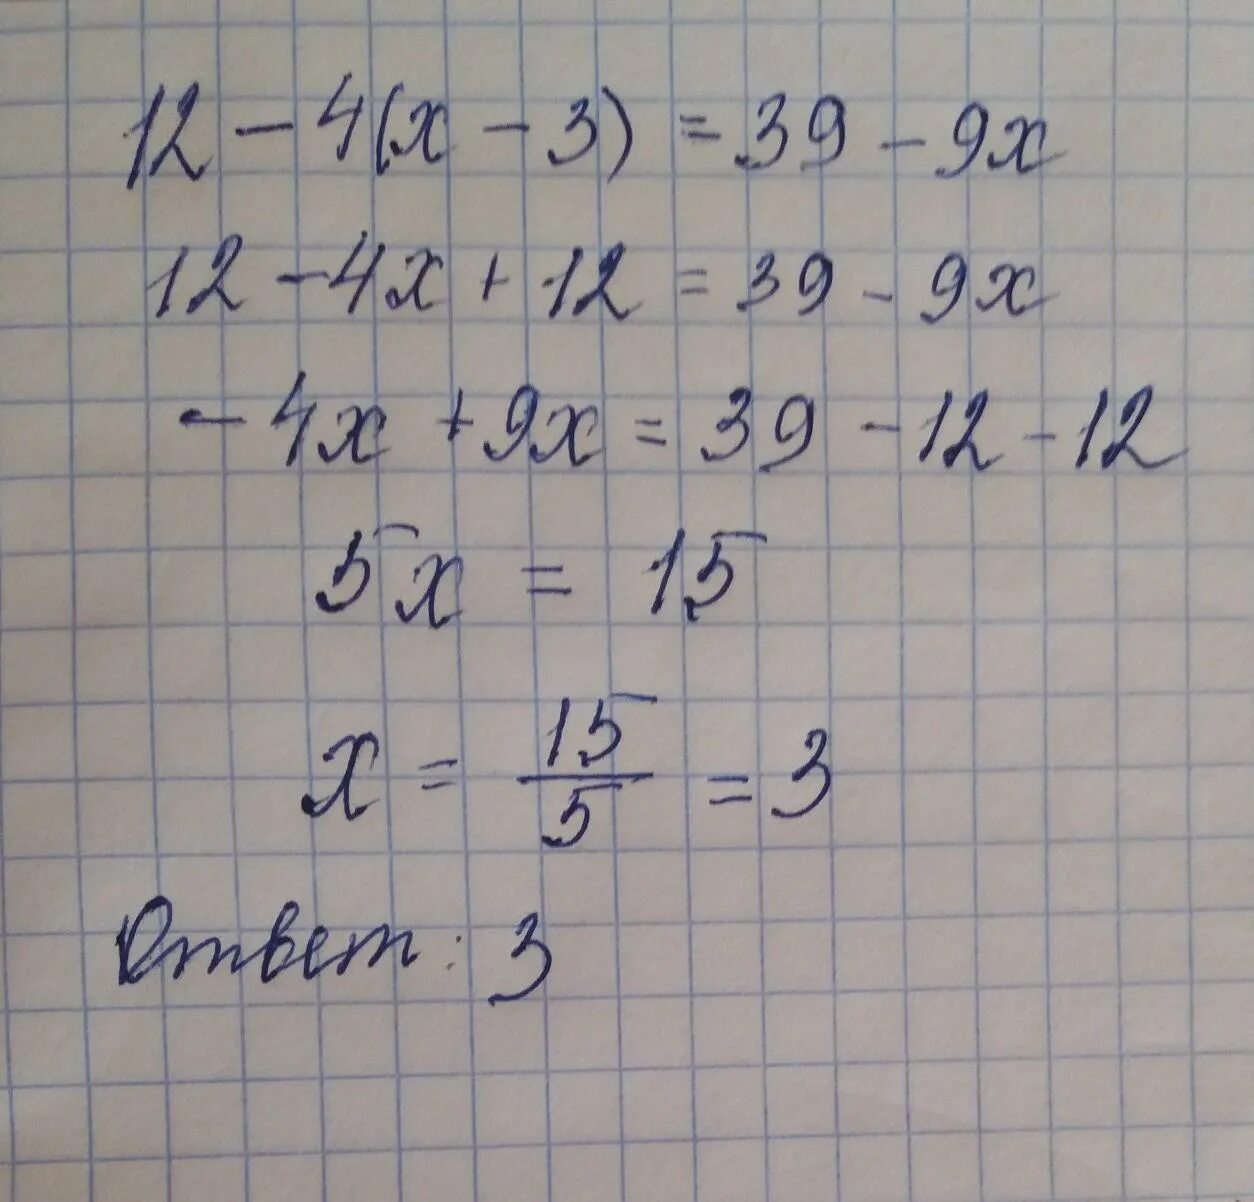 6 x 3 12 решение. 12-4(Х-3)=39-9х. 5х 3 12 решение. 3х 4у 12 решение. 4х+12=-4 решение.